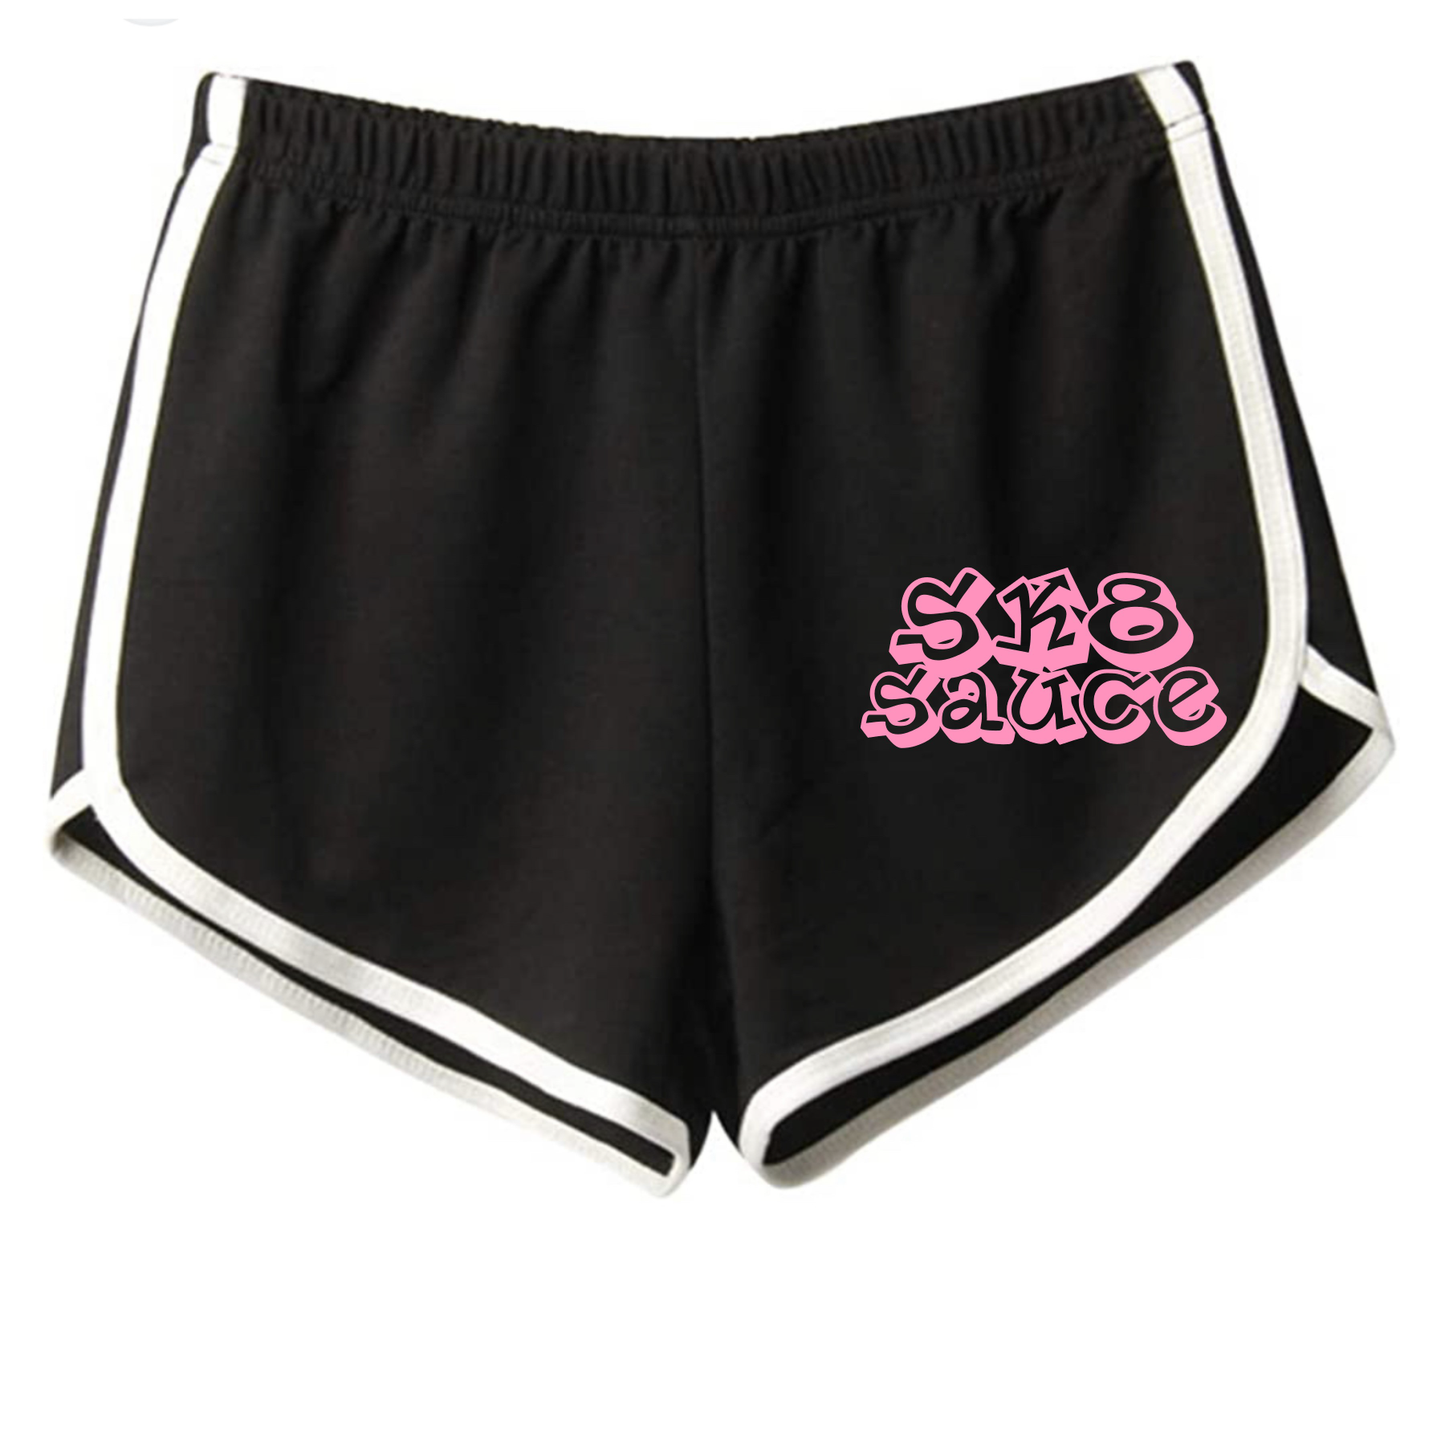 Sk8 Sauce Booty Shorts